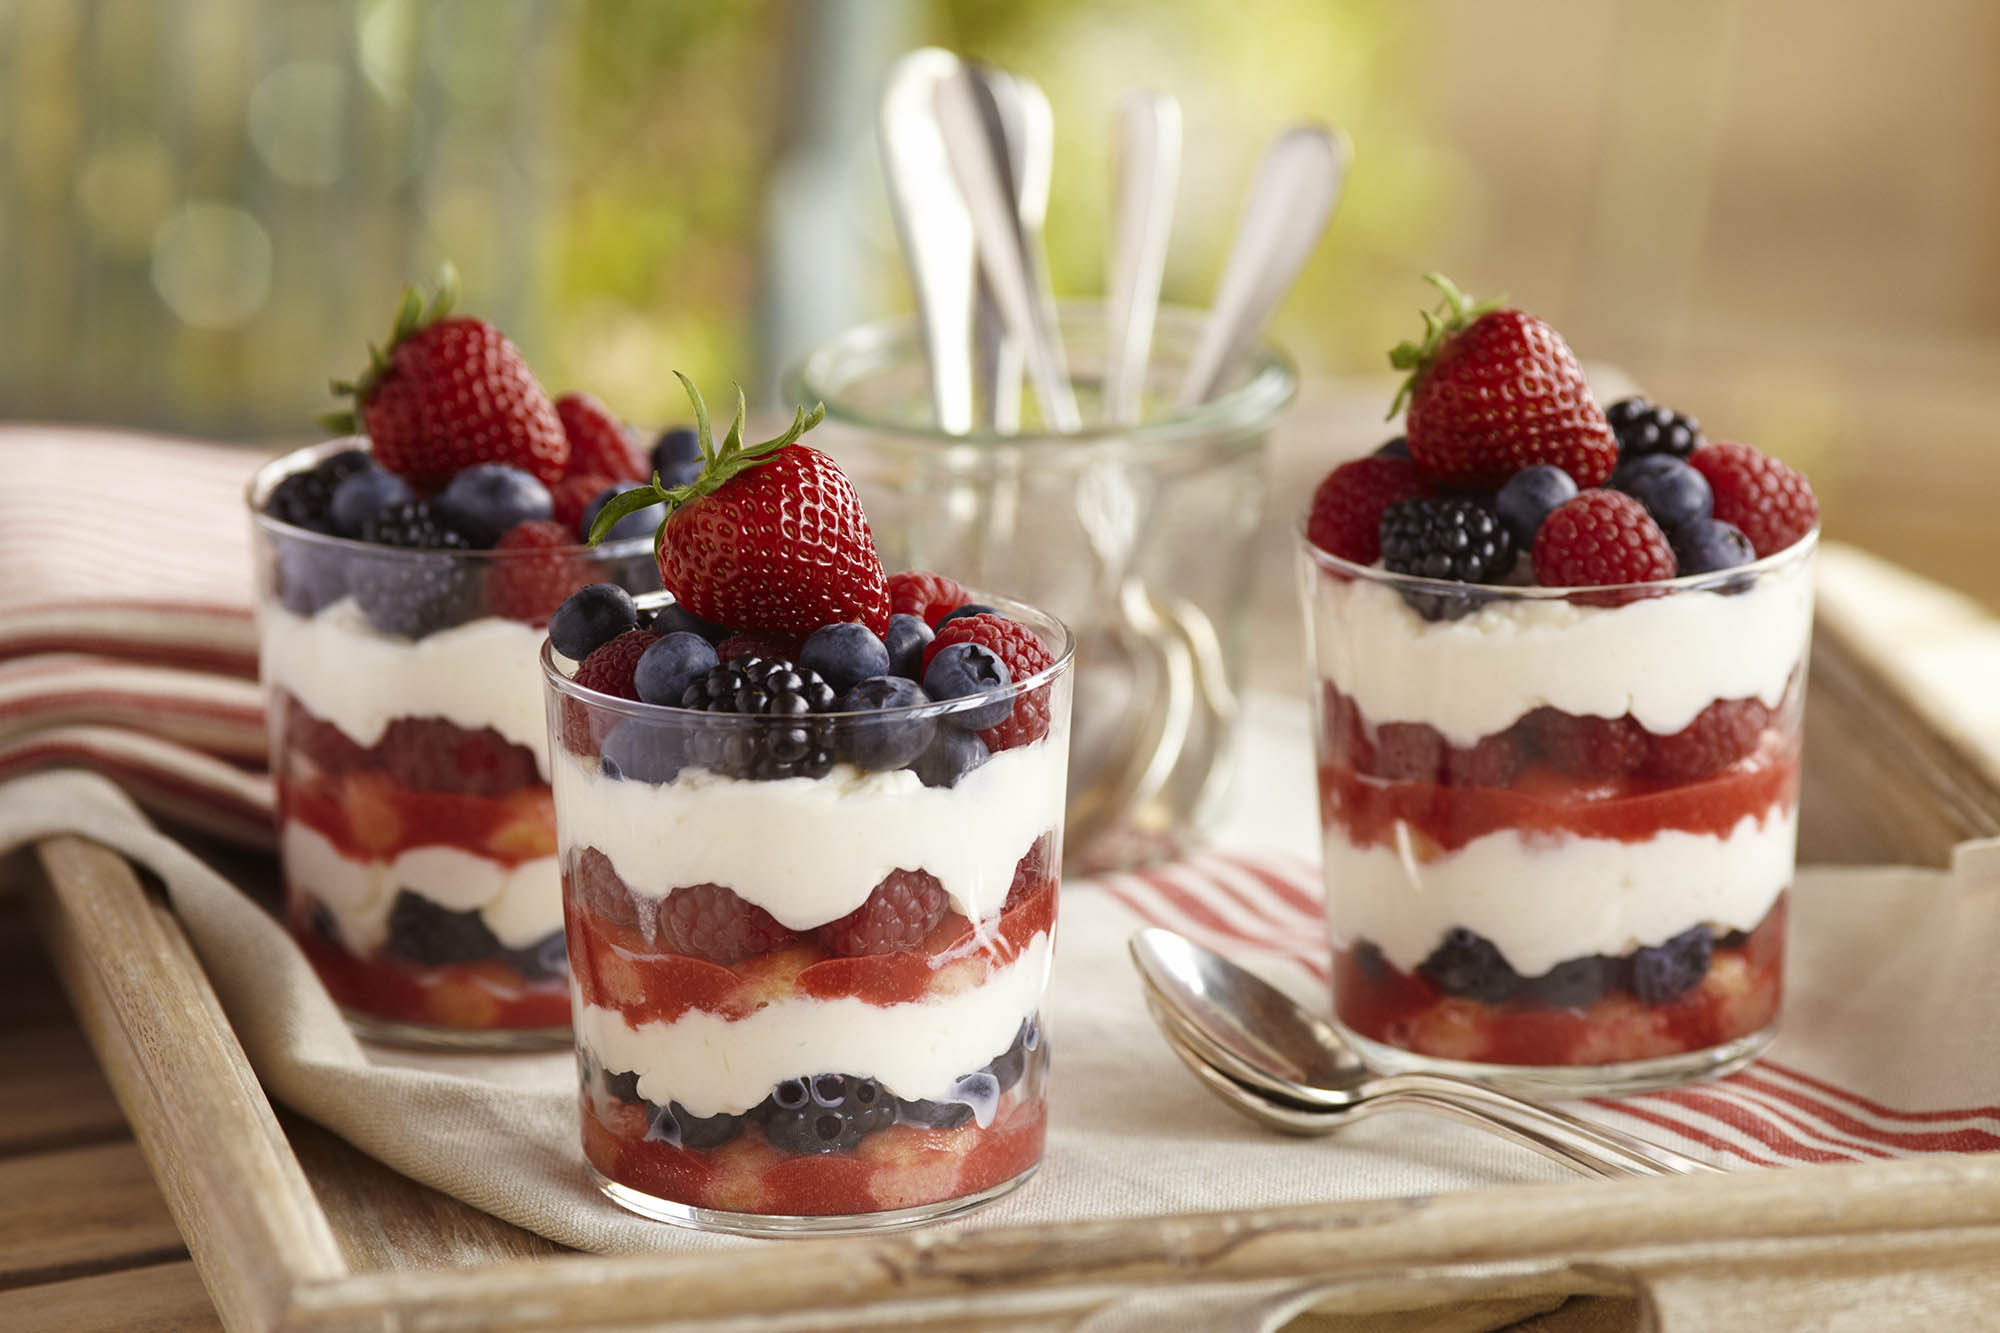 Tiramisu Mixed Berry Trifle